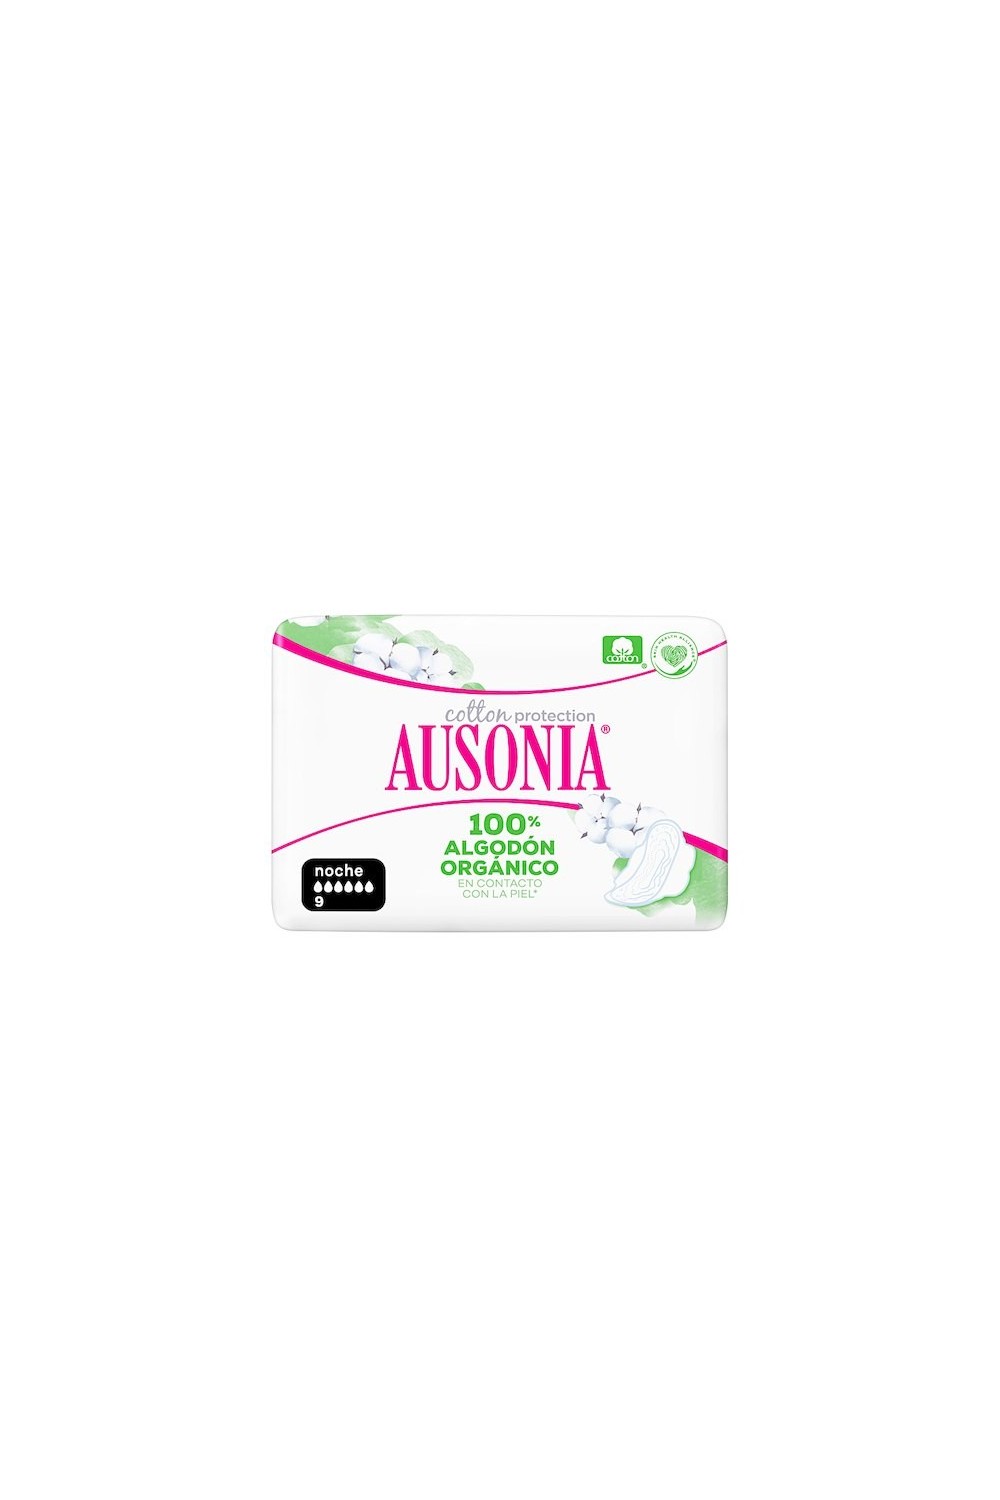 Ausonia Organic 100% Night Alas 9 Units